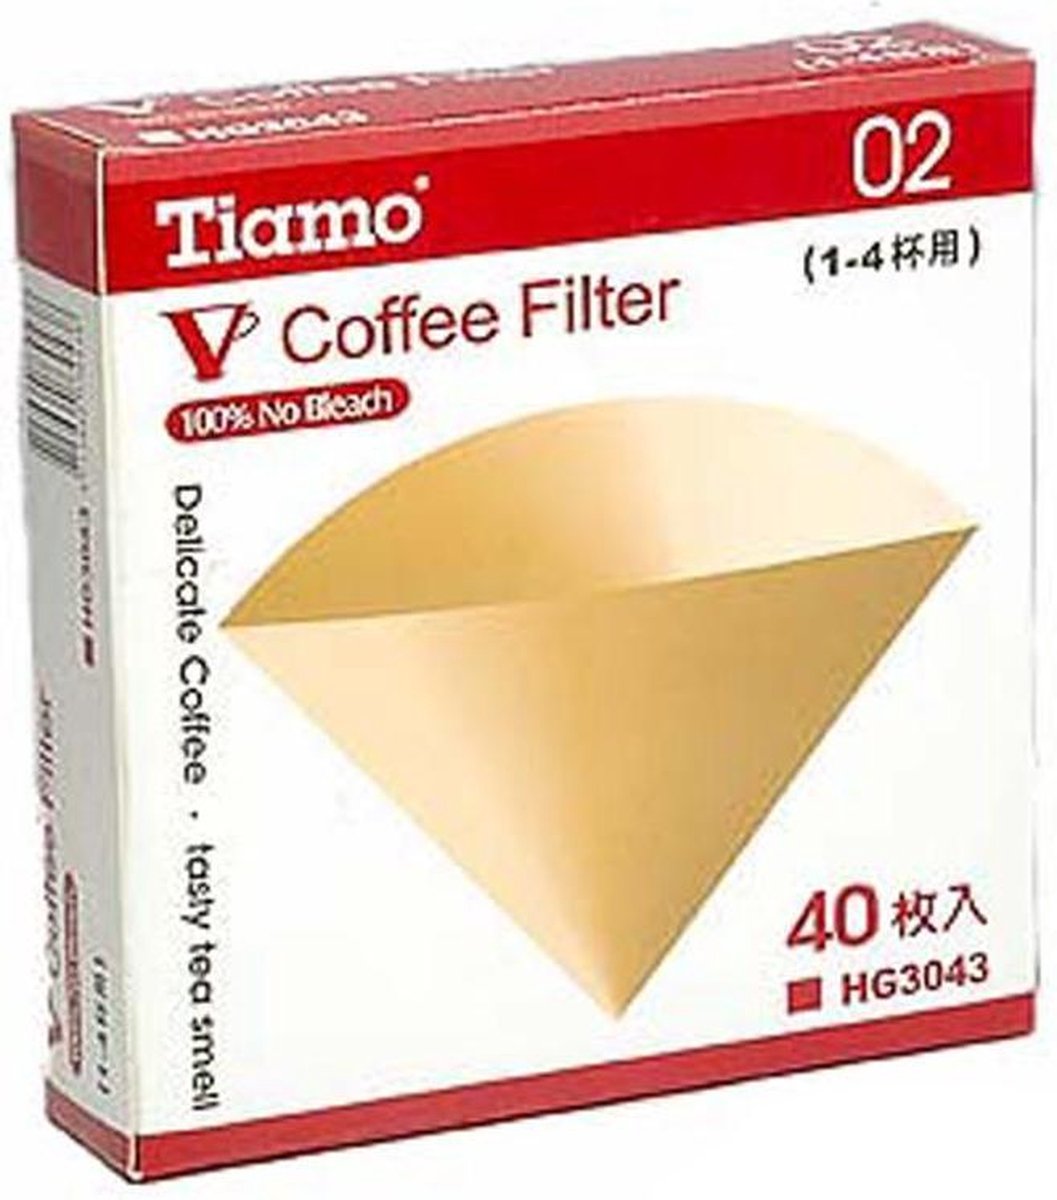 Tiamo 02 koffiefilters